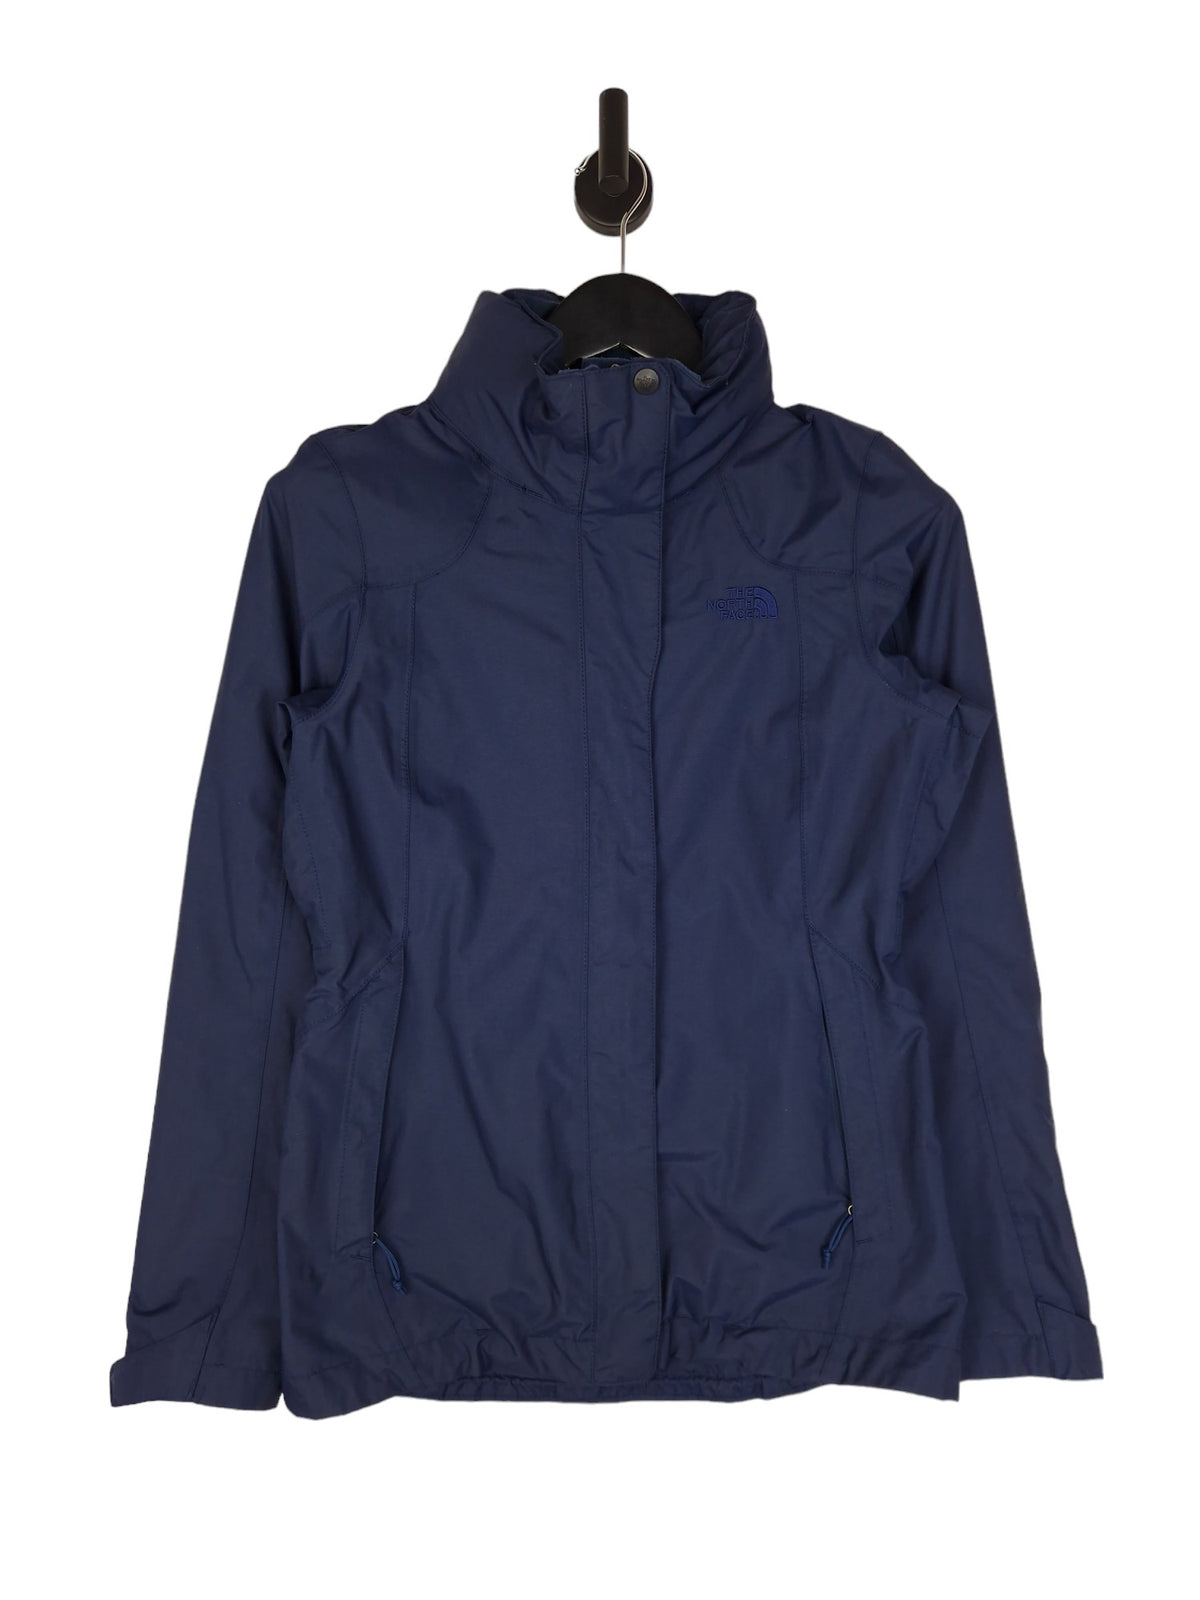 The North Face Hyvent Rain Jacket - Size XS UK 6